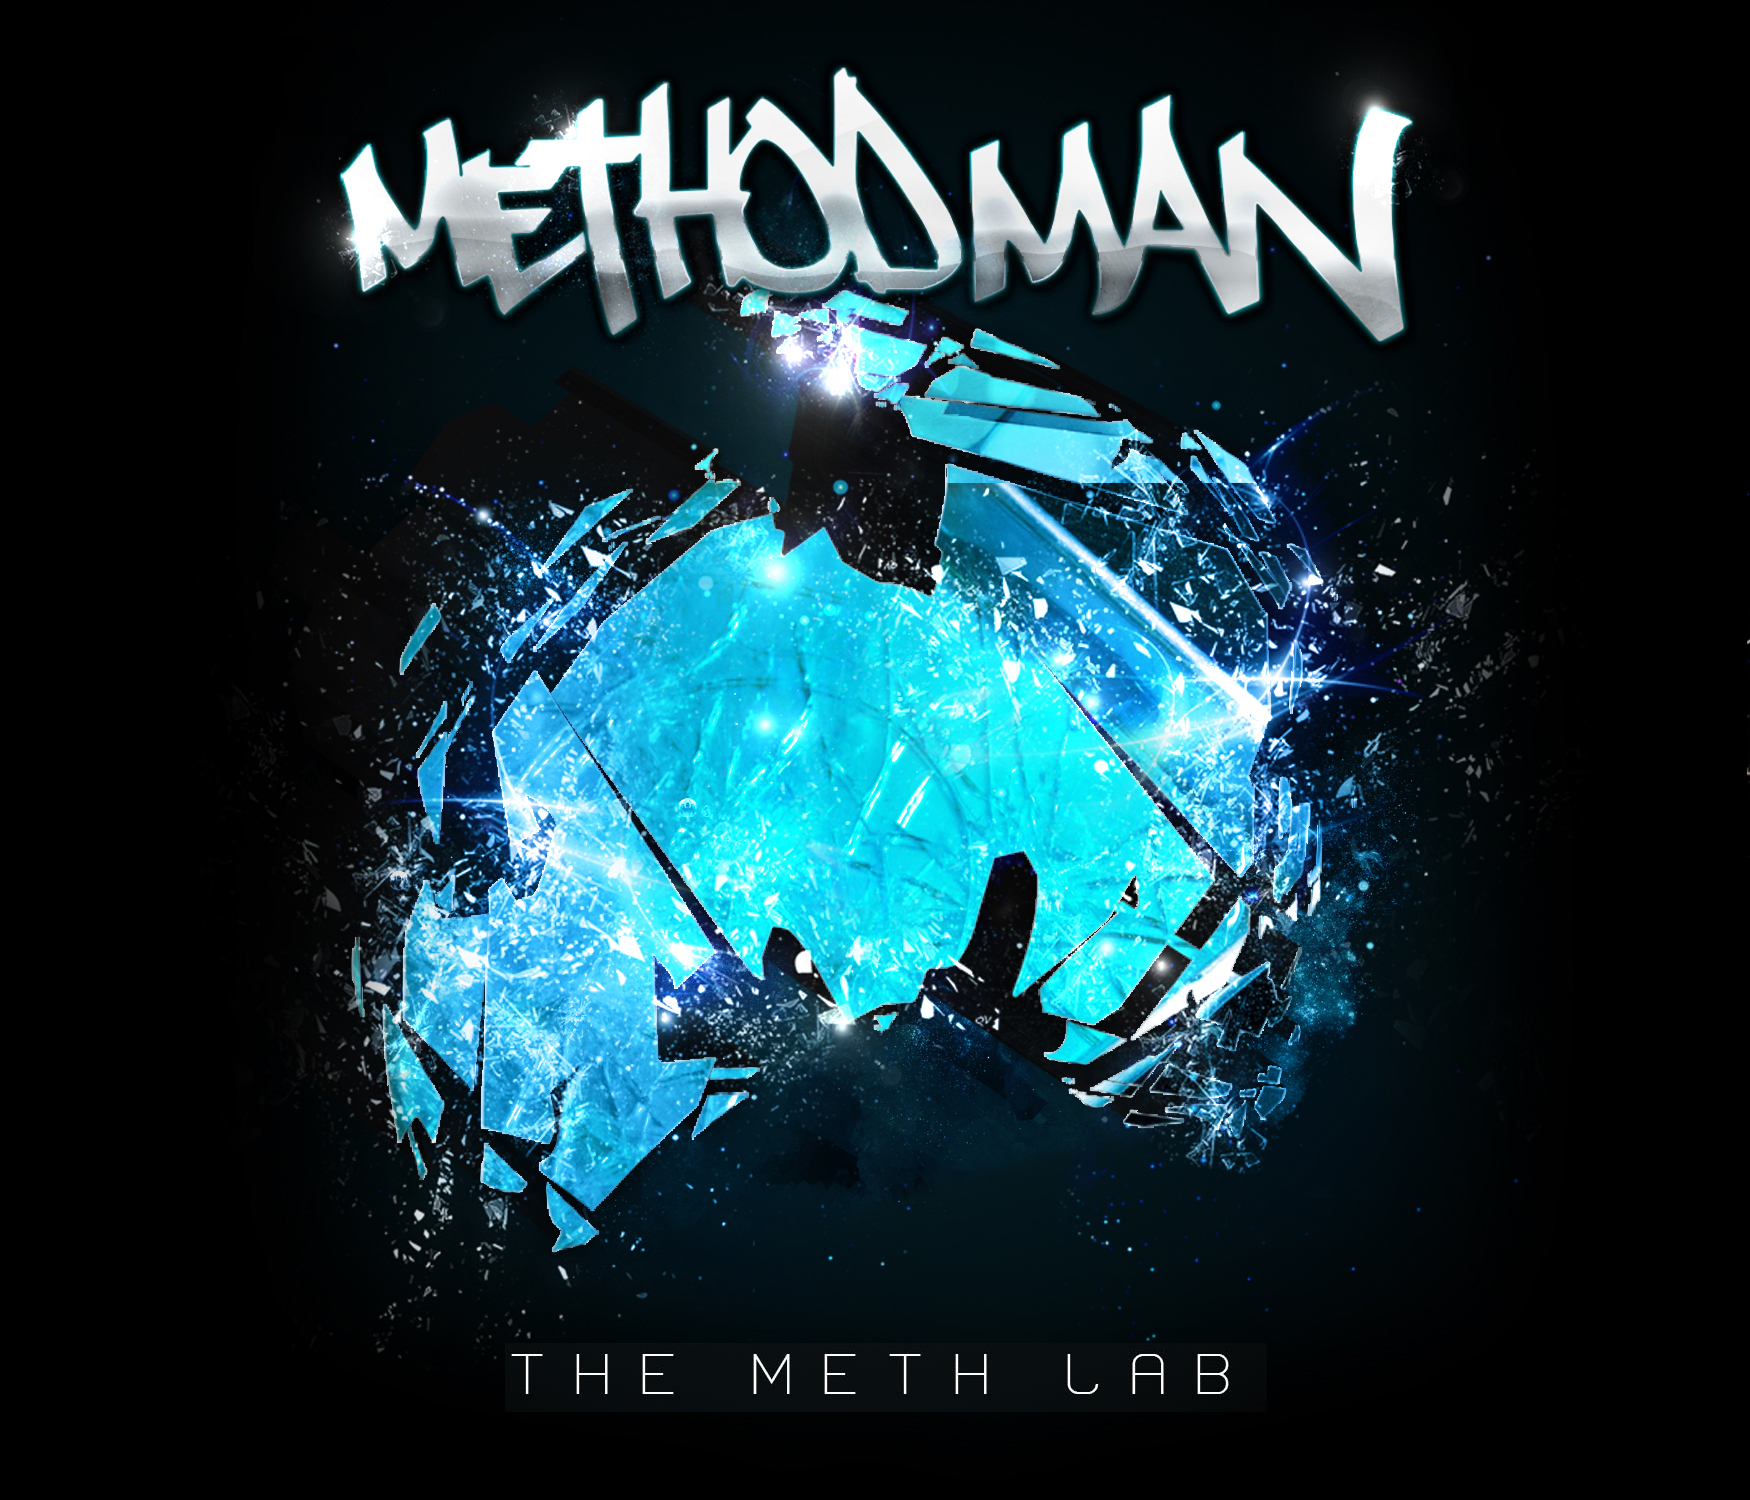 recenzja-method-man-the-meth-lab-soulbowl-pl-soulbowl-pl